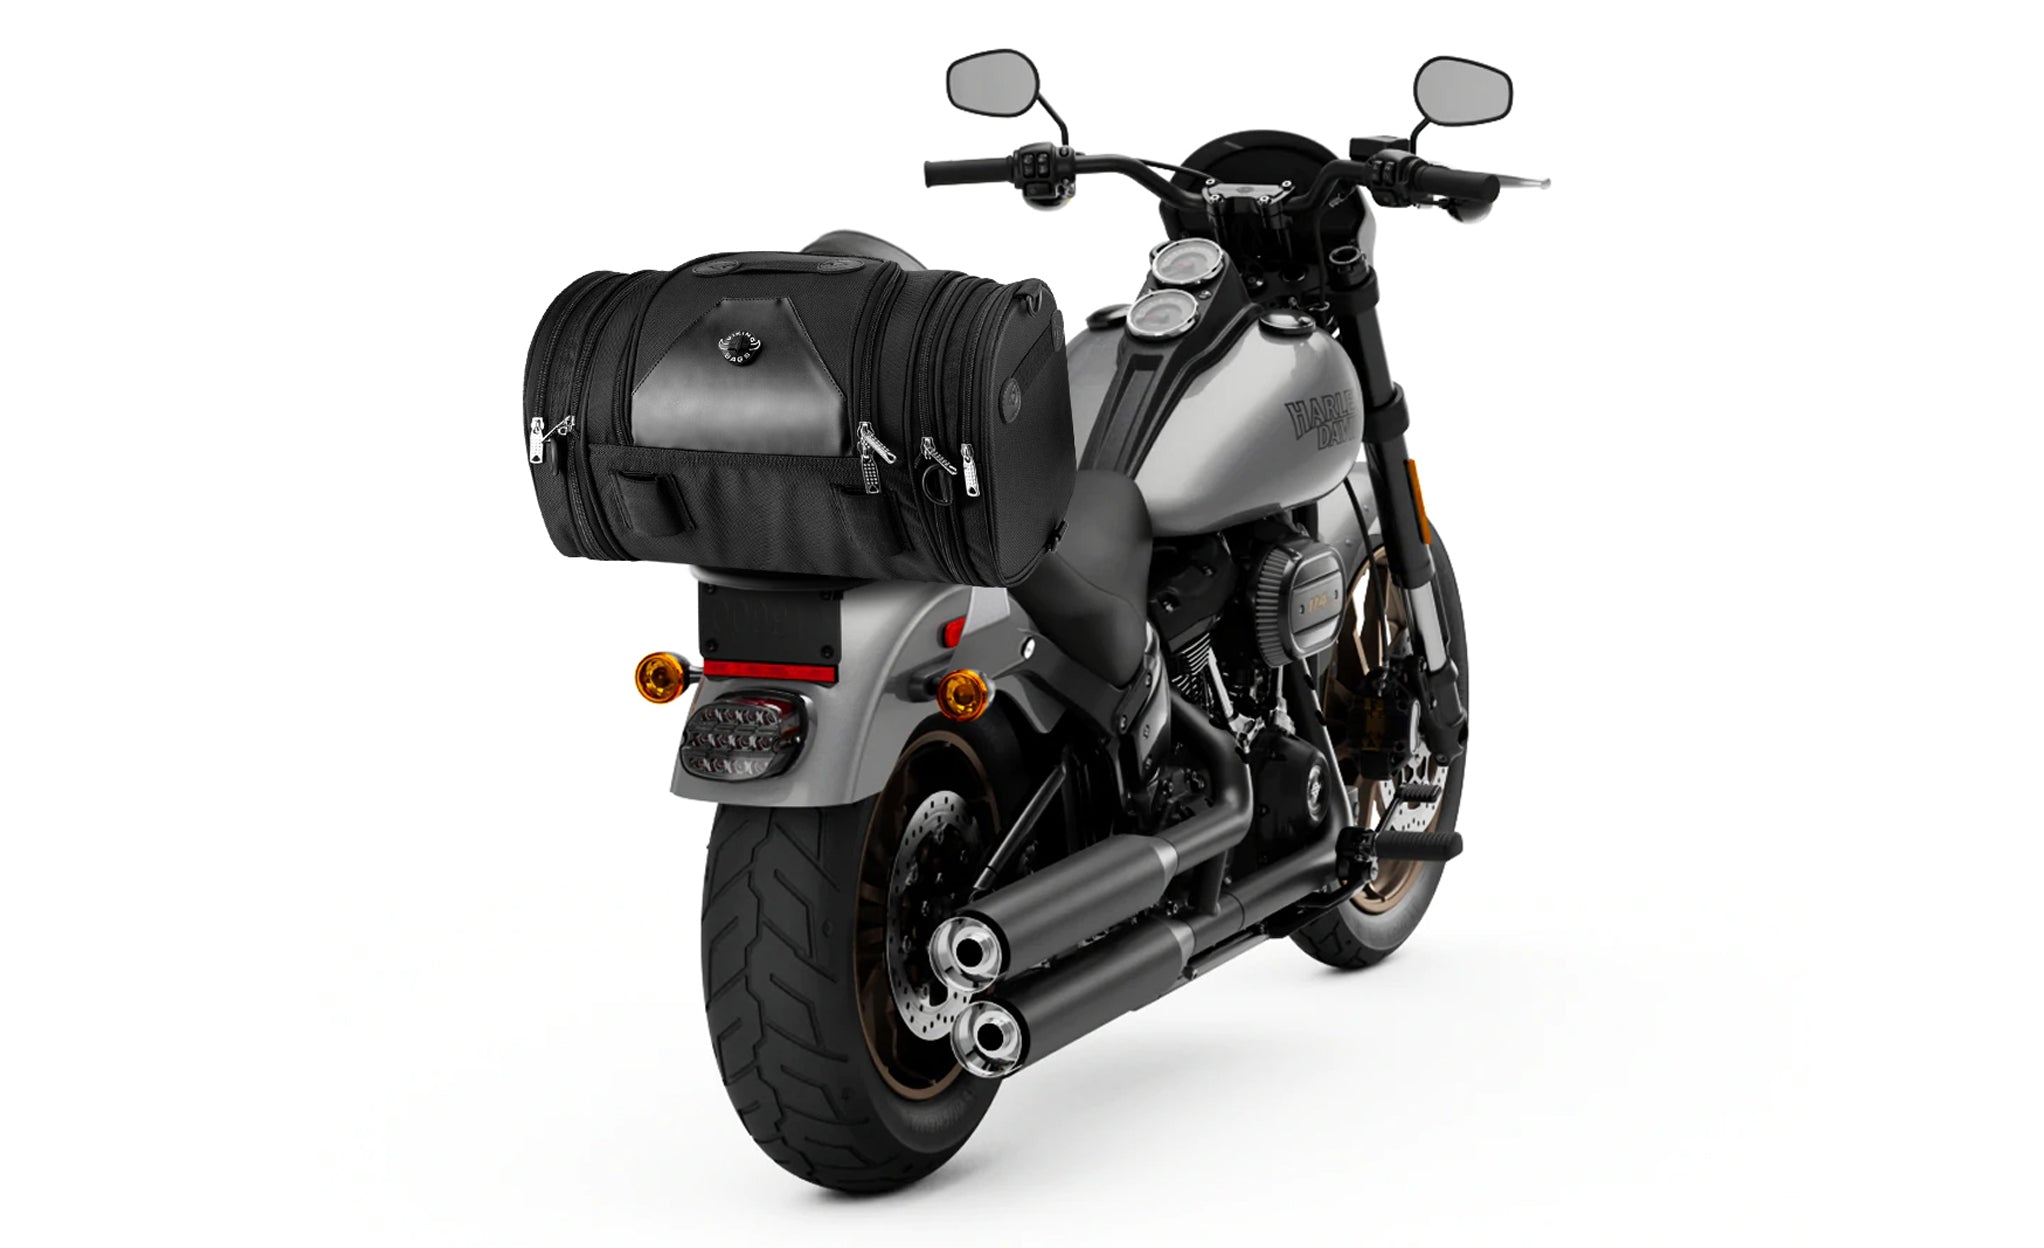 Viking Axwell Small Motorcycle Sissy Bar Bag Bag on Bike View @expand